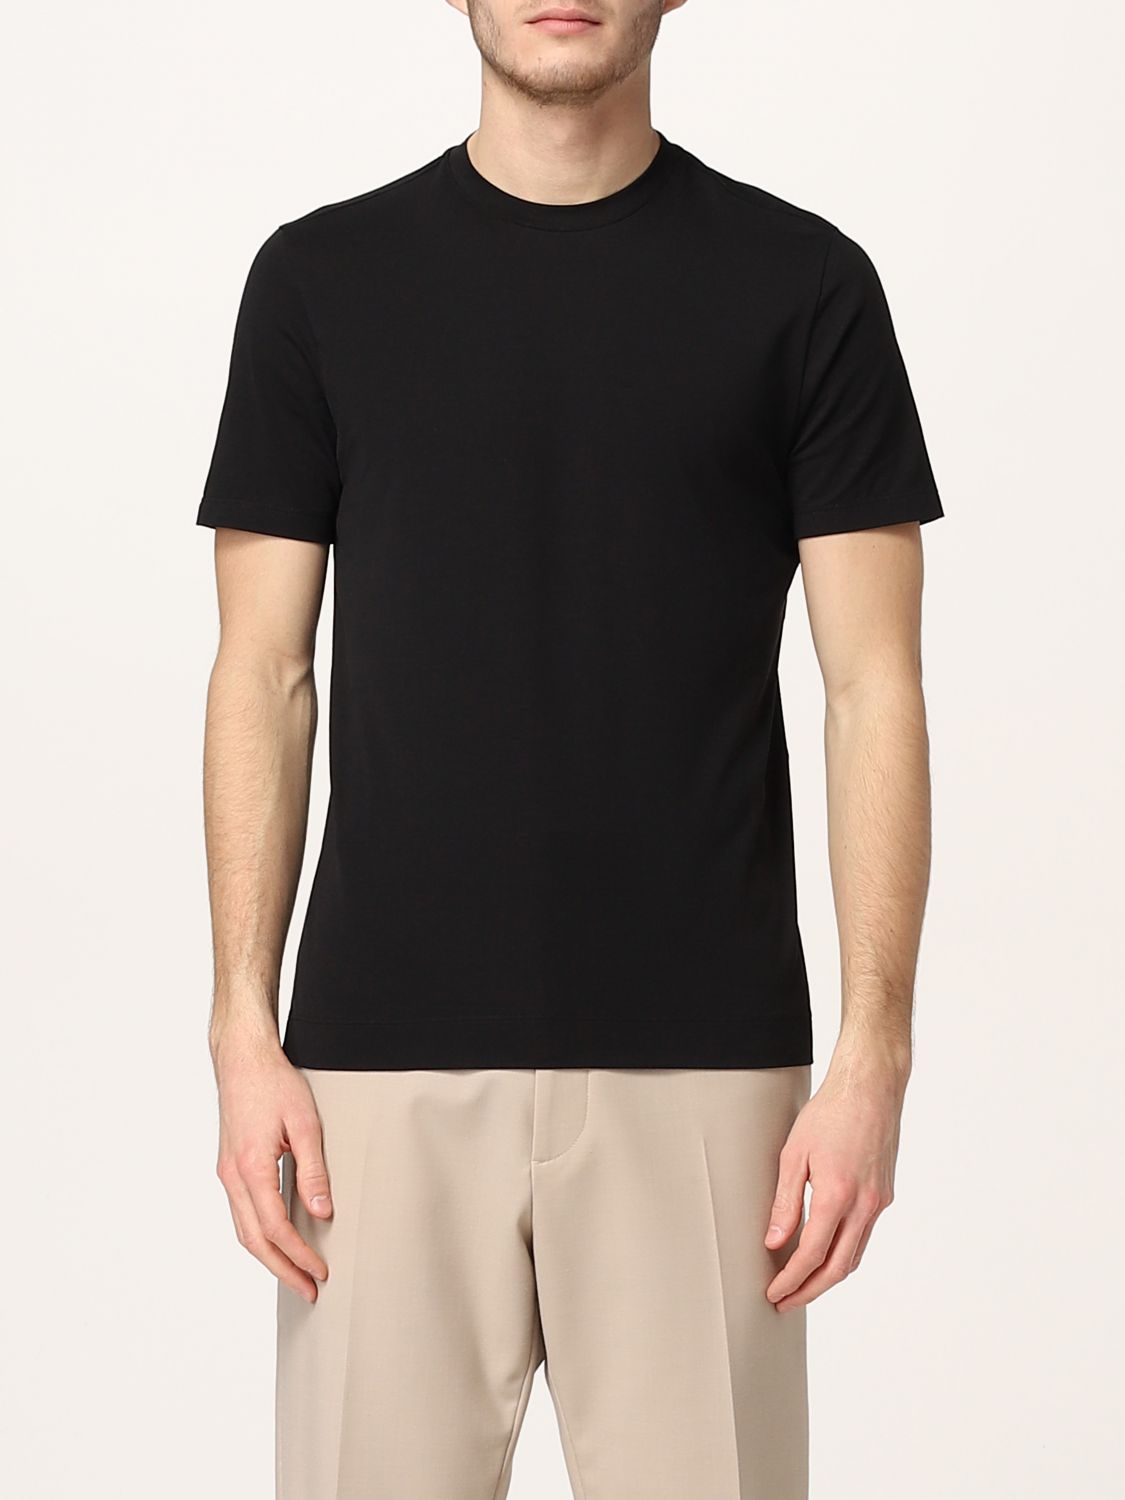 CRUCIANI: t-shirt for man - Black | Cruciani t-shirt CUJOSG30PV online ...